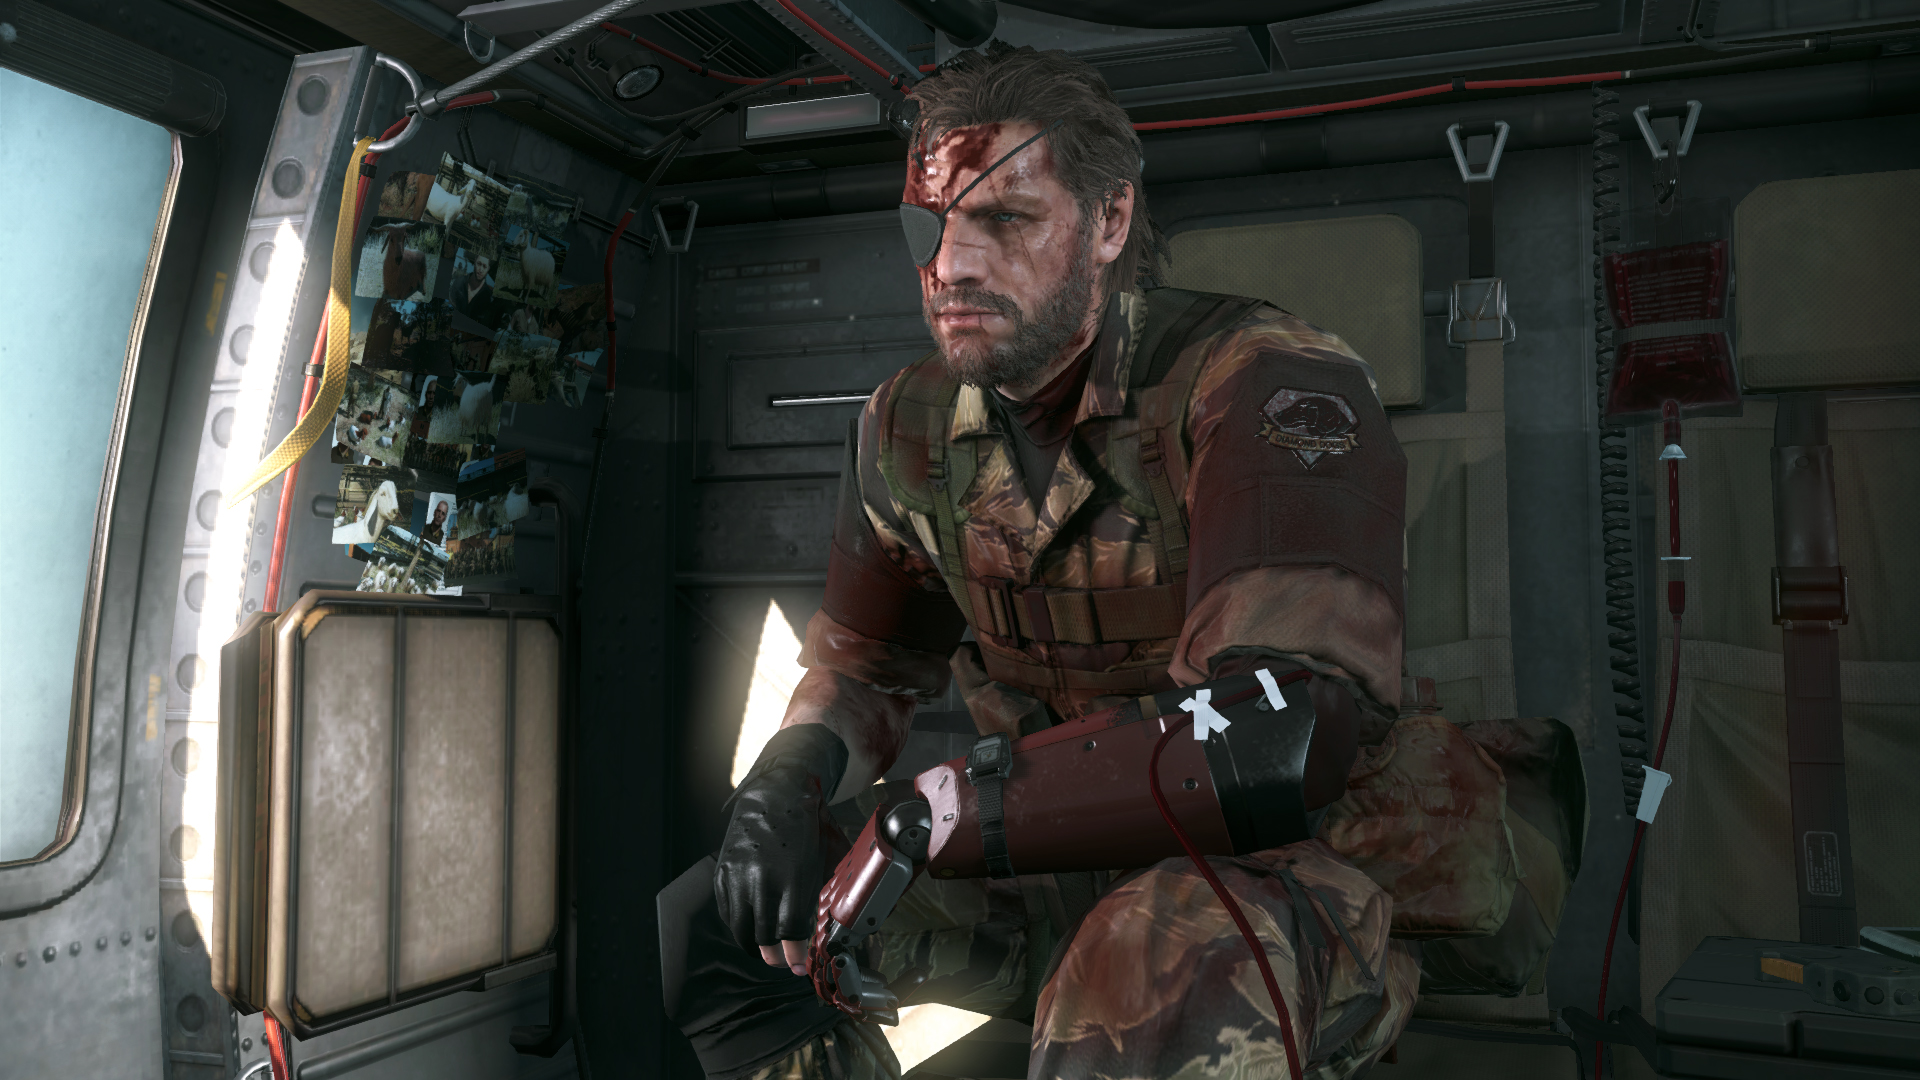 Mgs 5 the phantom pain. Metal Gear Solid 5. Ьуефд пуфк ыщдшв 5 еру зрфтещь зфшт. Биг босс Metal Gear.